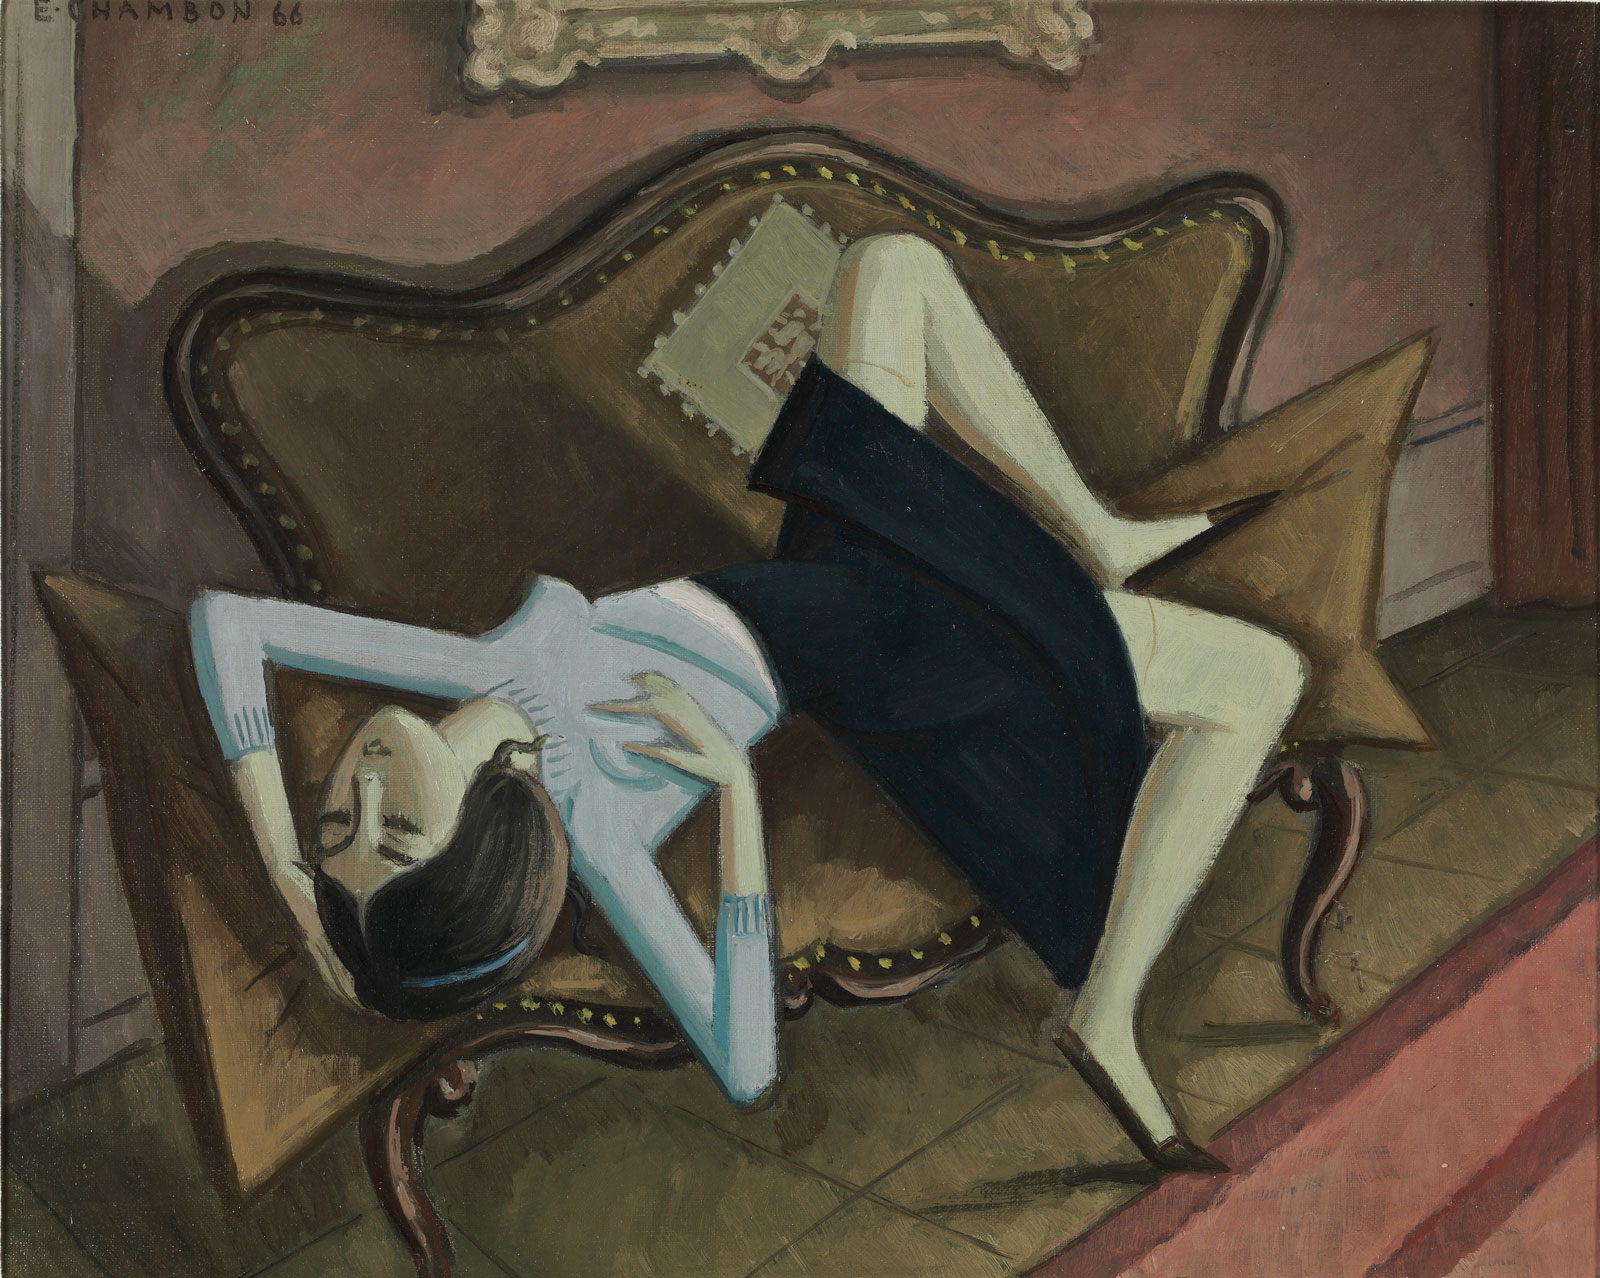 Émile François Chambon: Sleeper on her back, 1966–1968